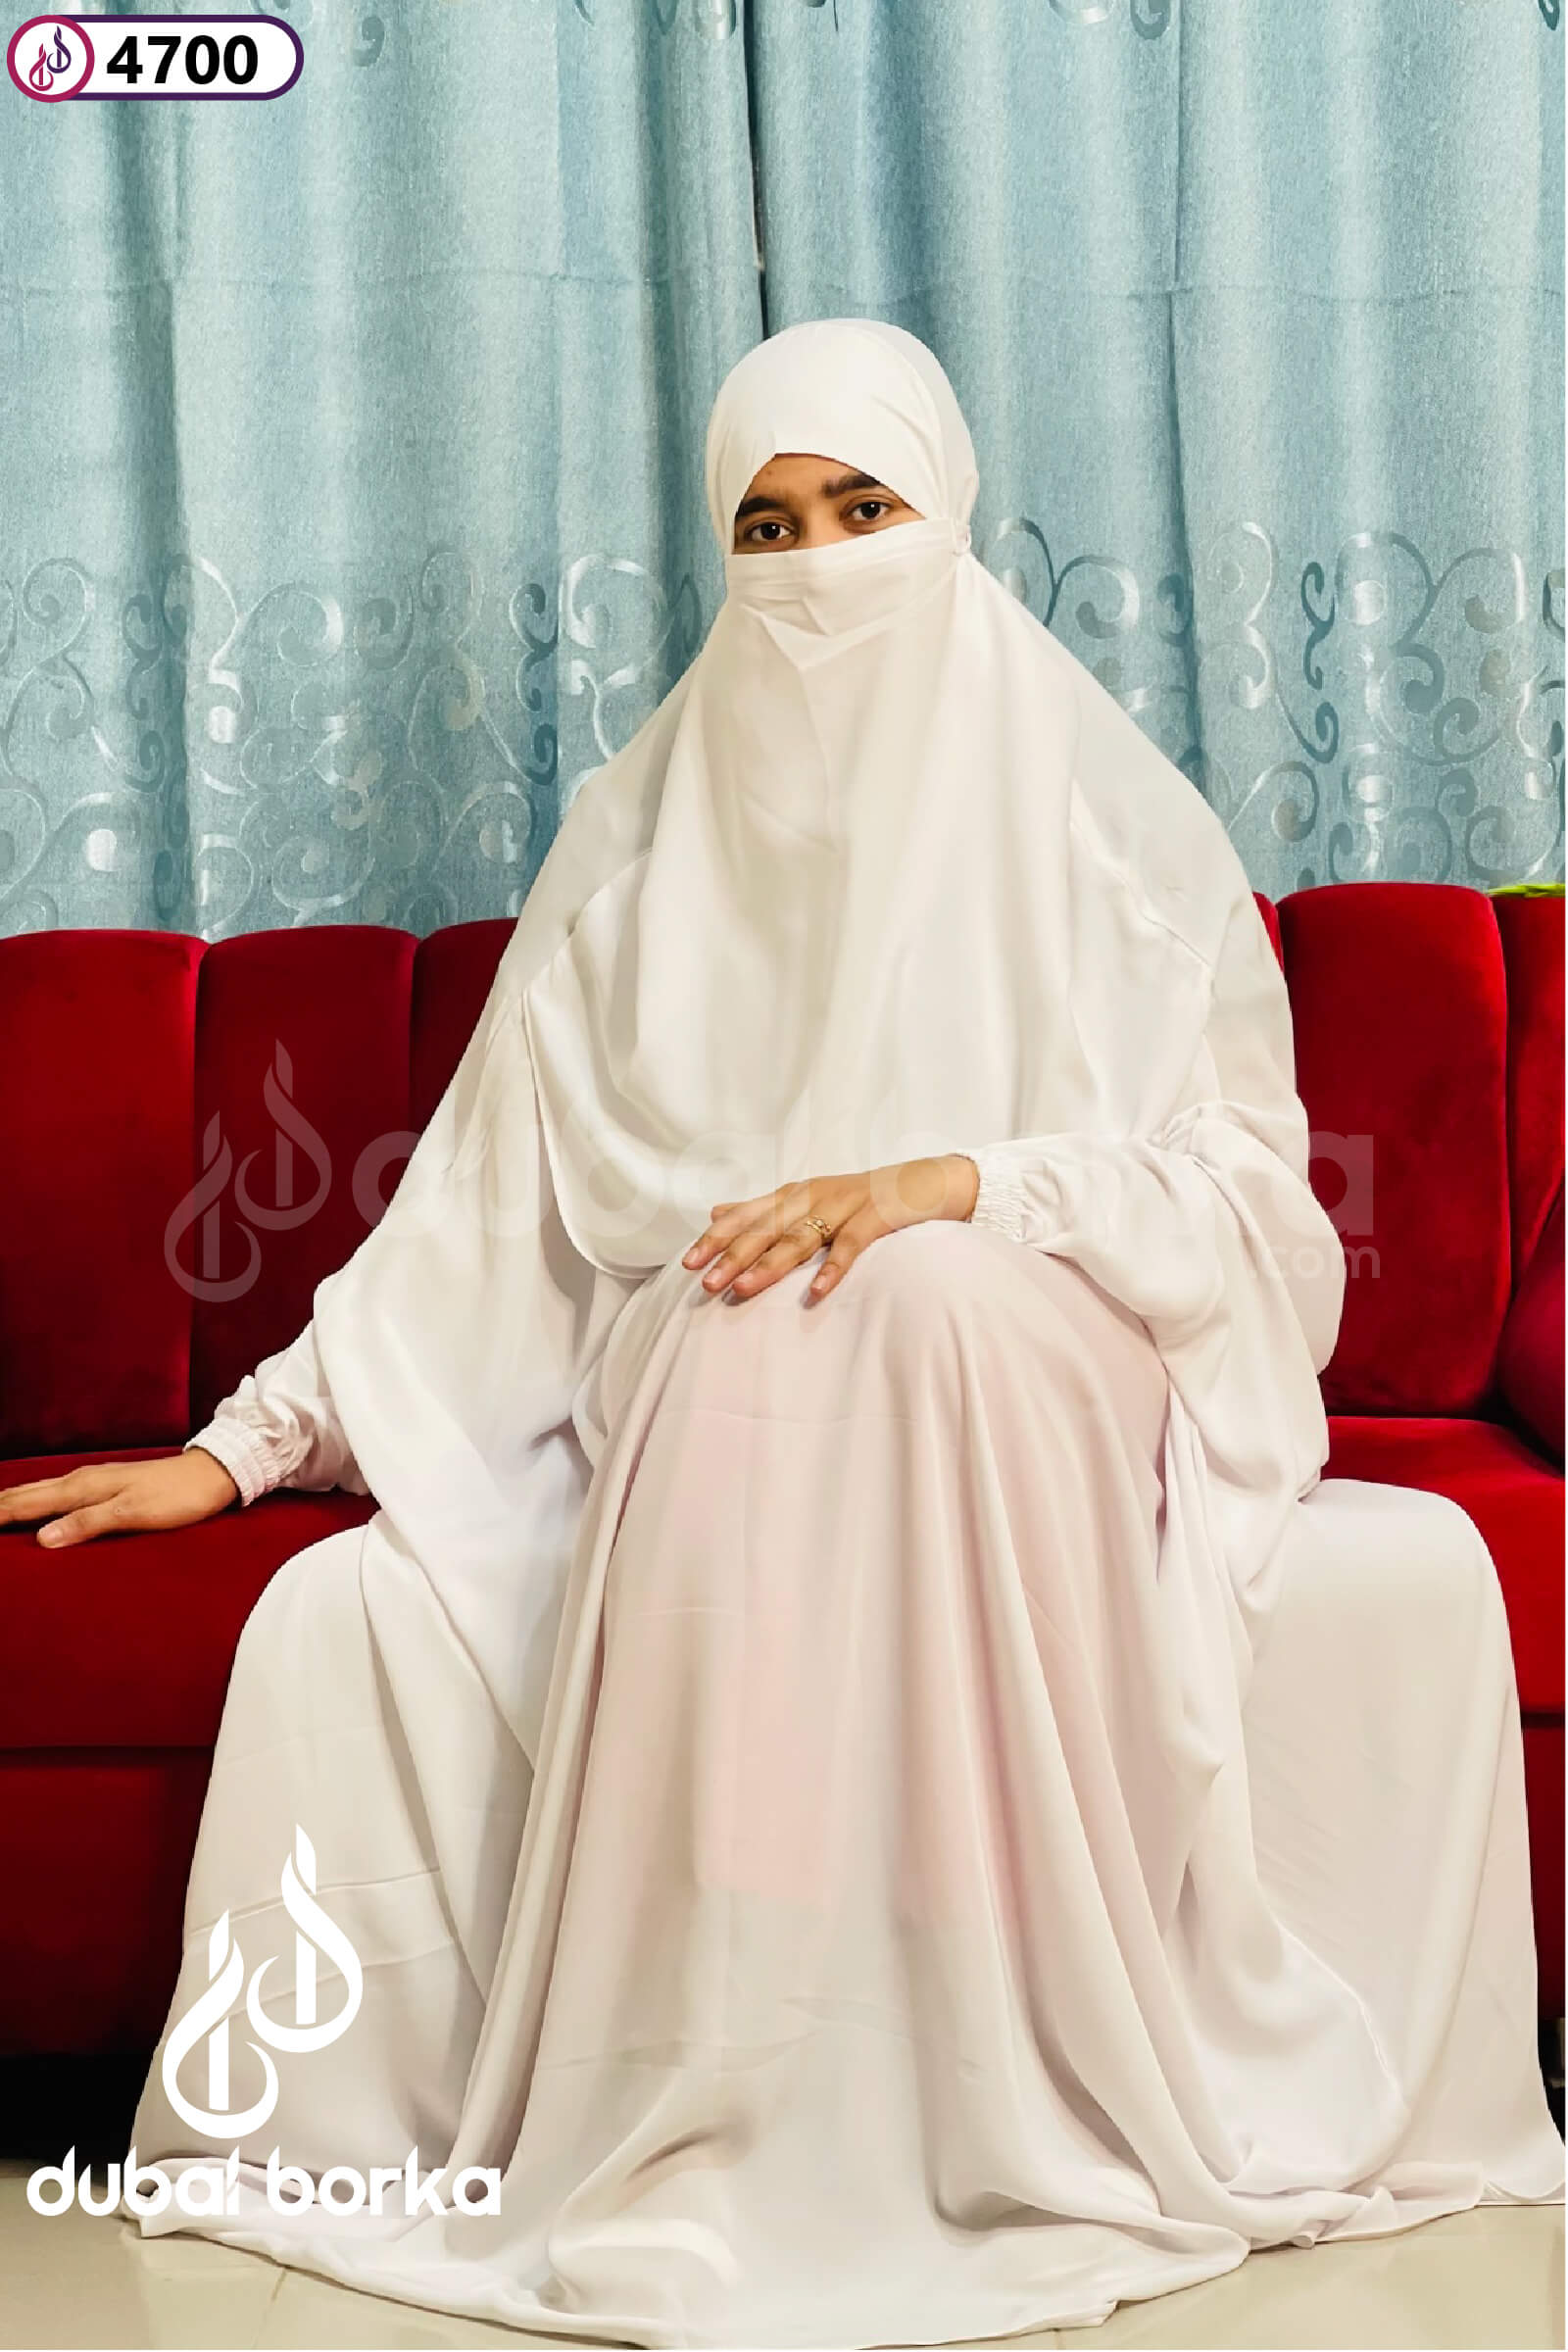 Plain Jilbab full coverage for hajj or umrah White